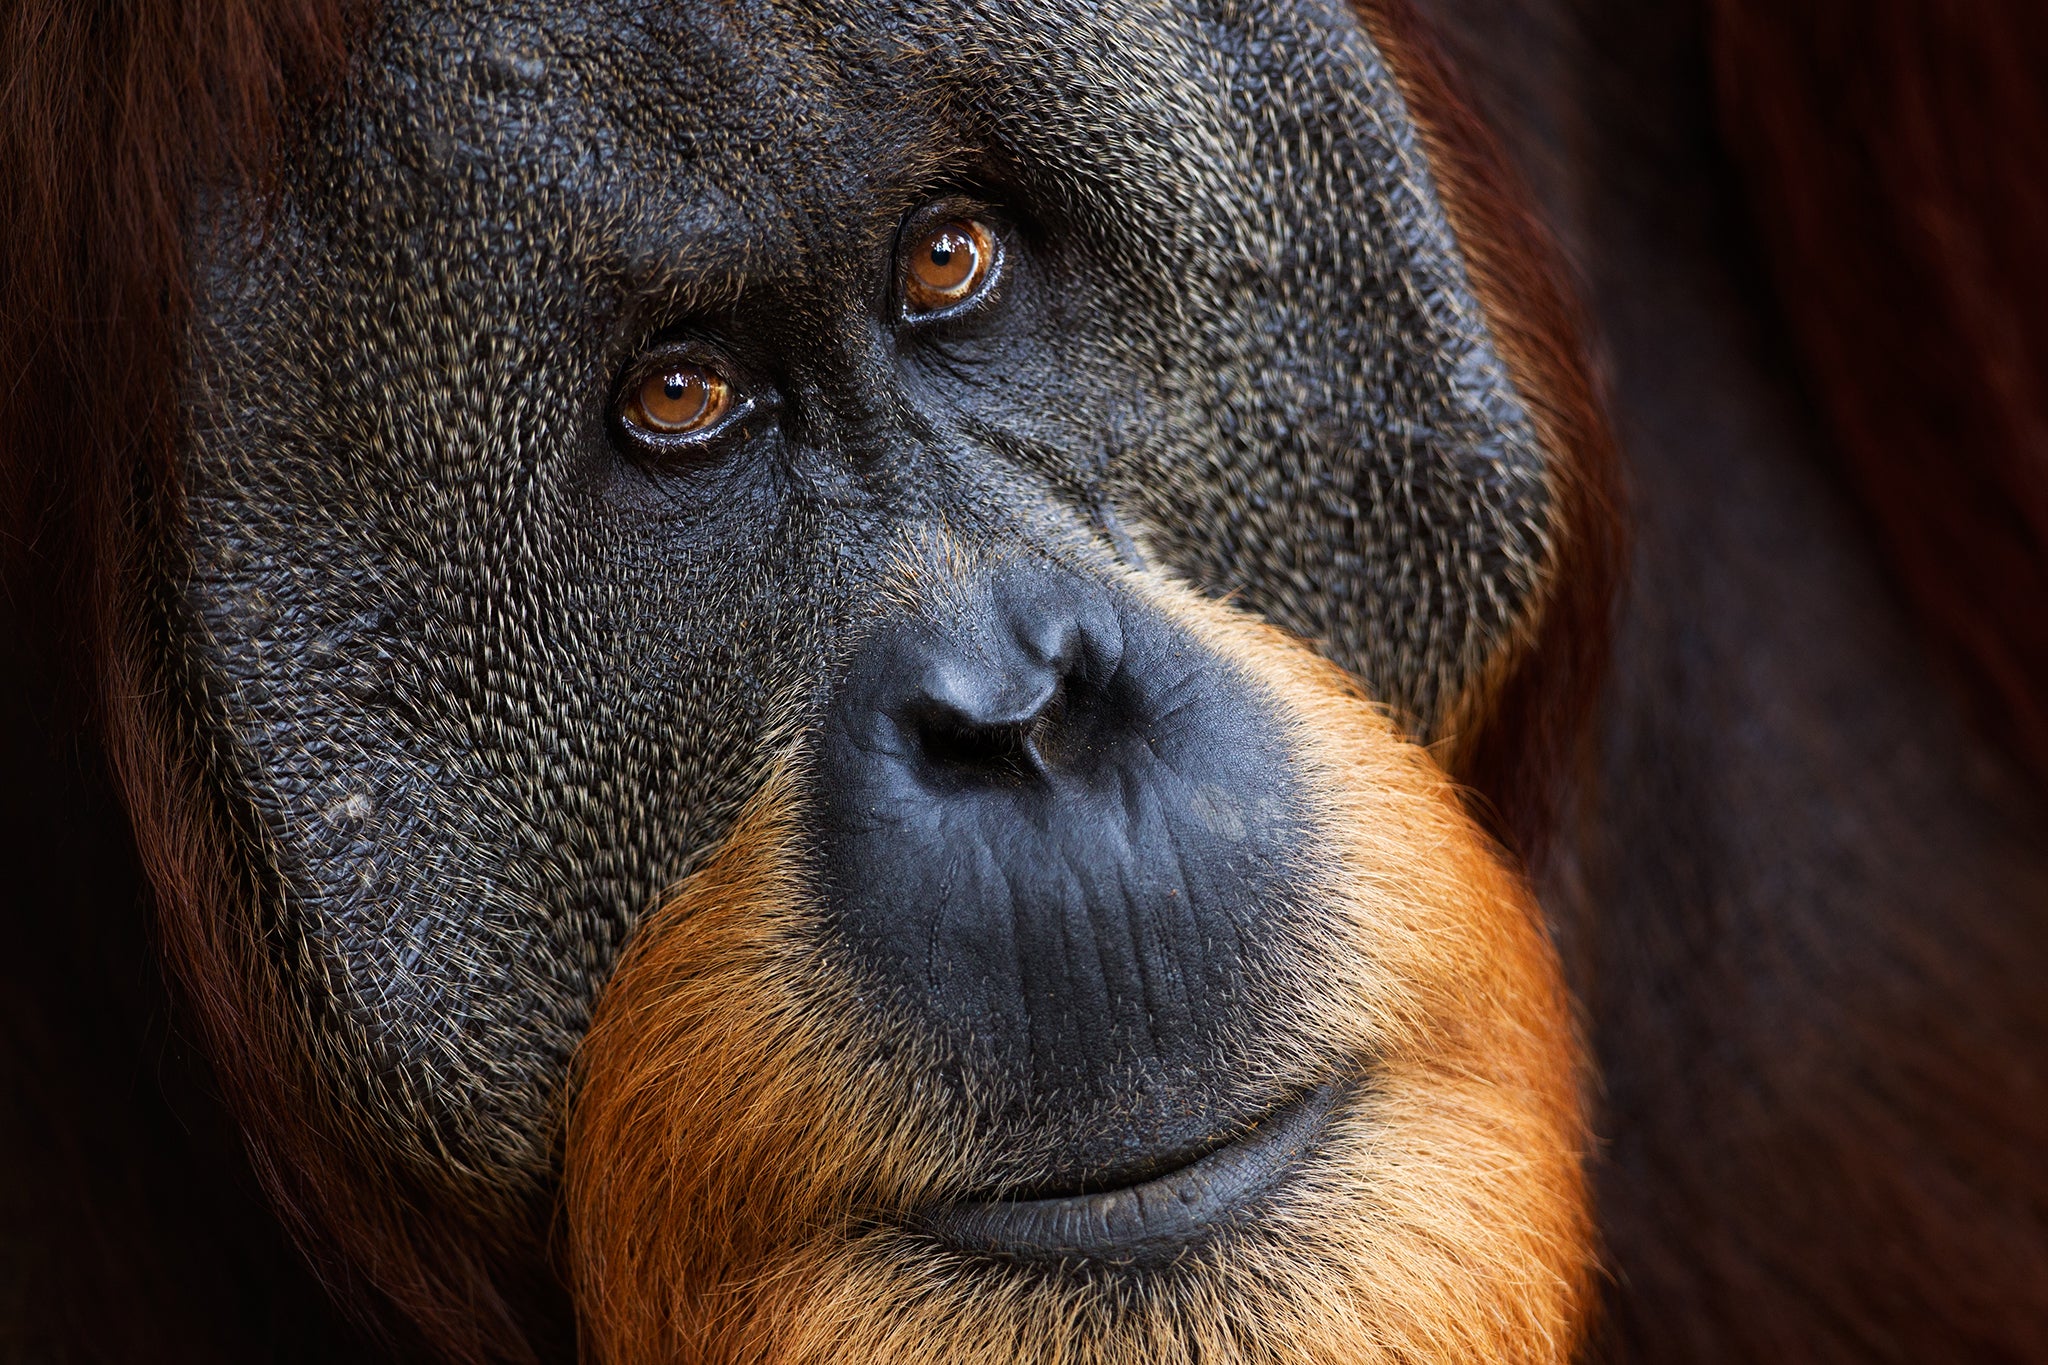 Halik, a 26-year-old male Sumatran orangutan, Gunung Leuser National Park, Sumatra, Indonesia